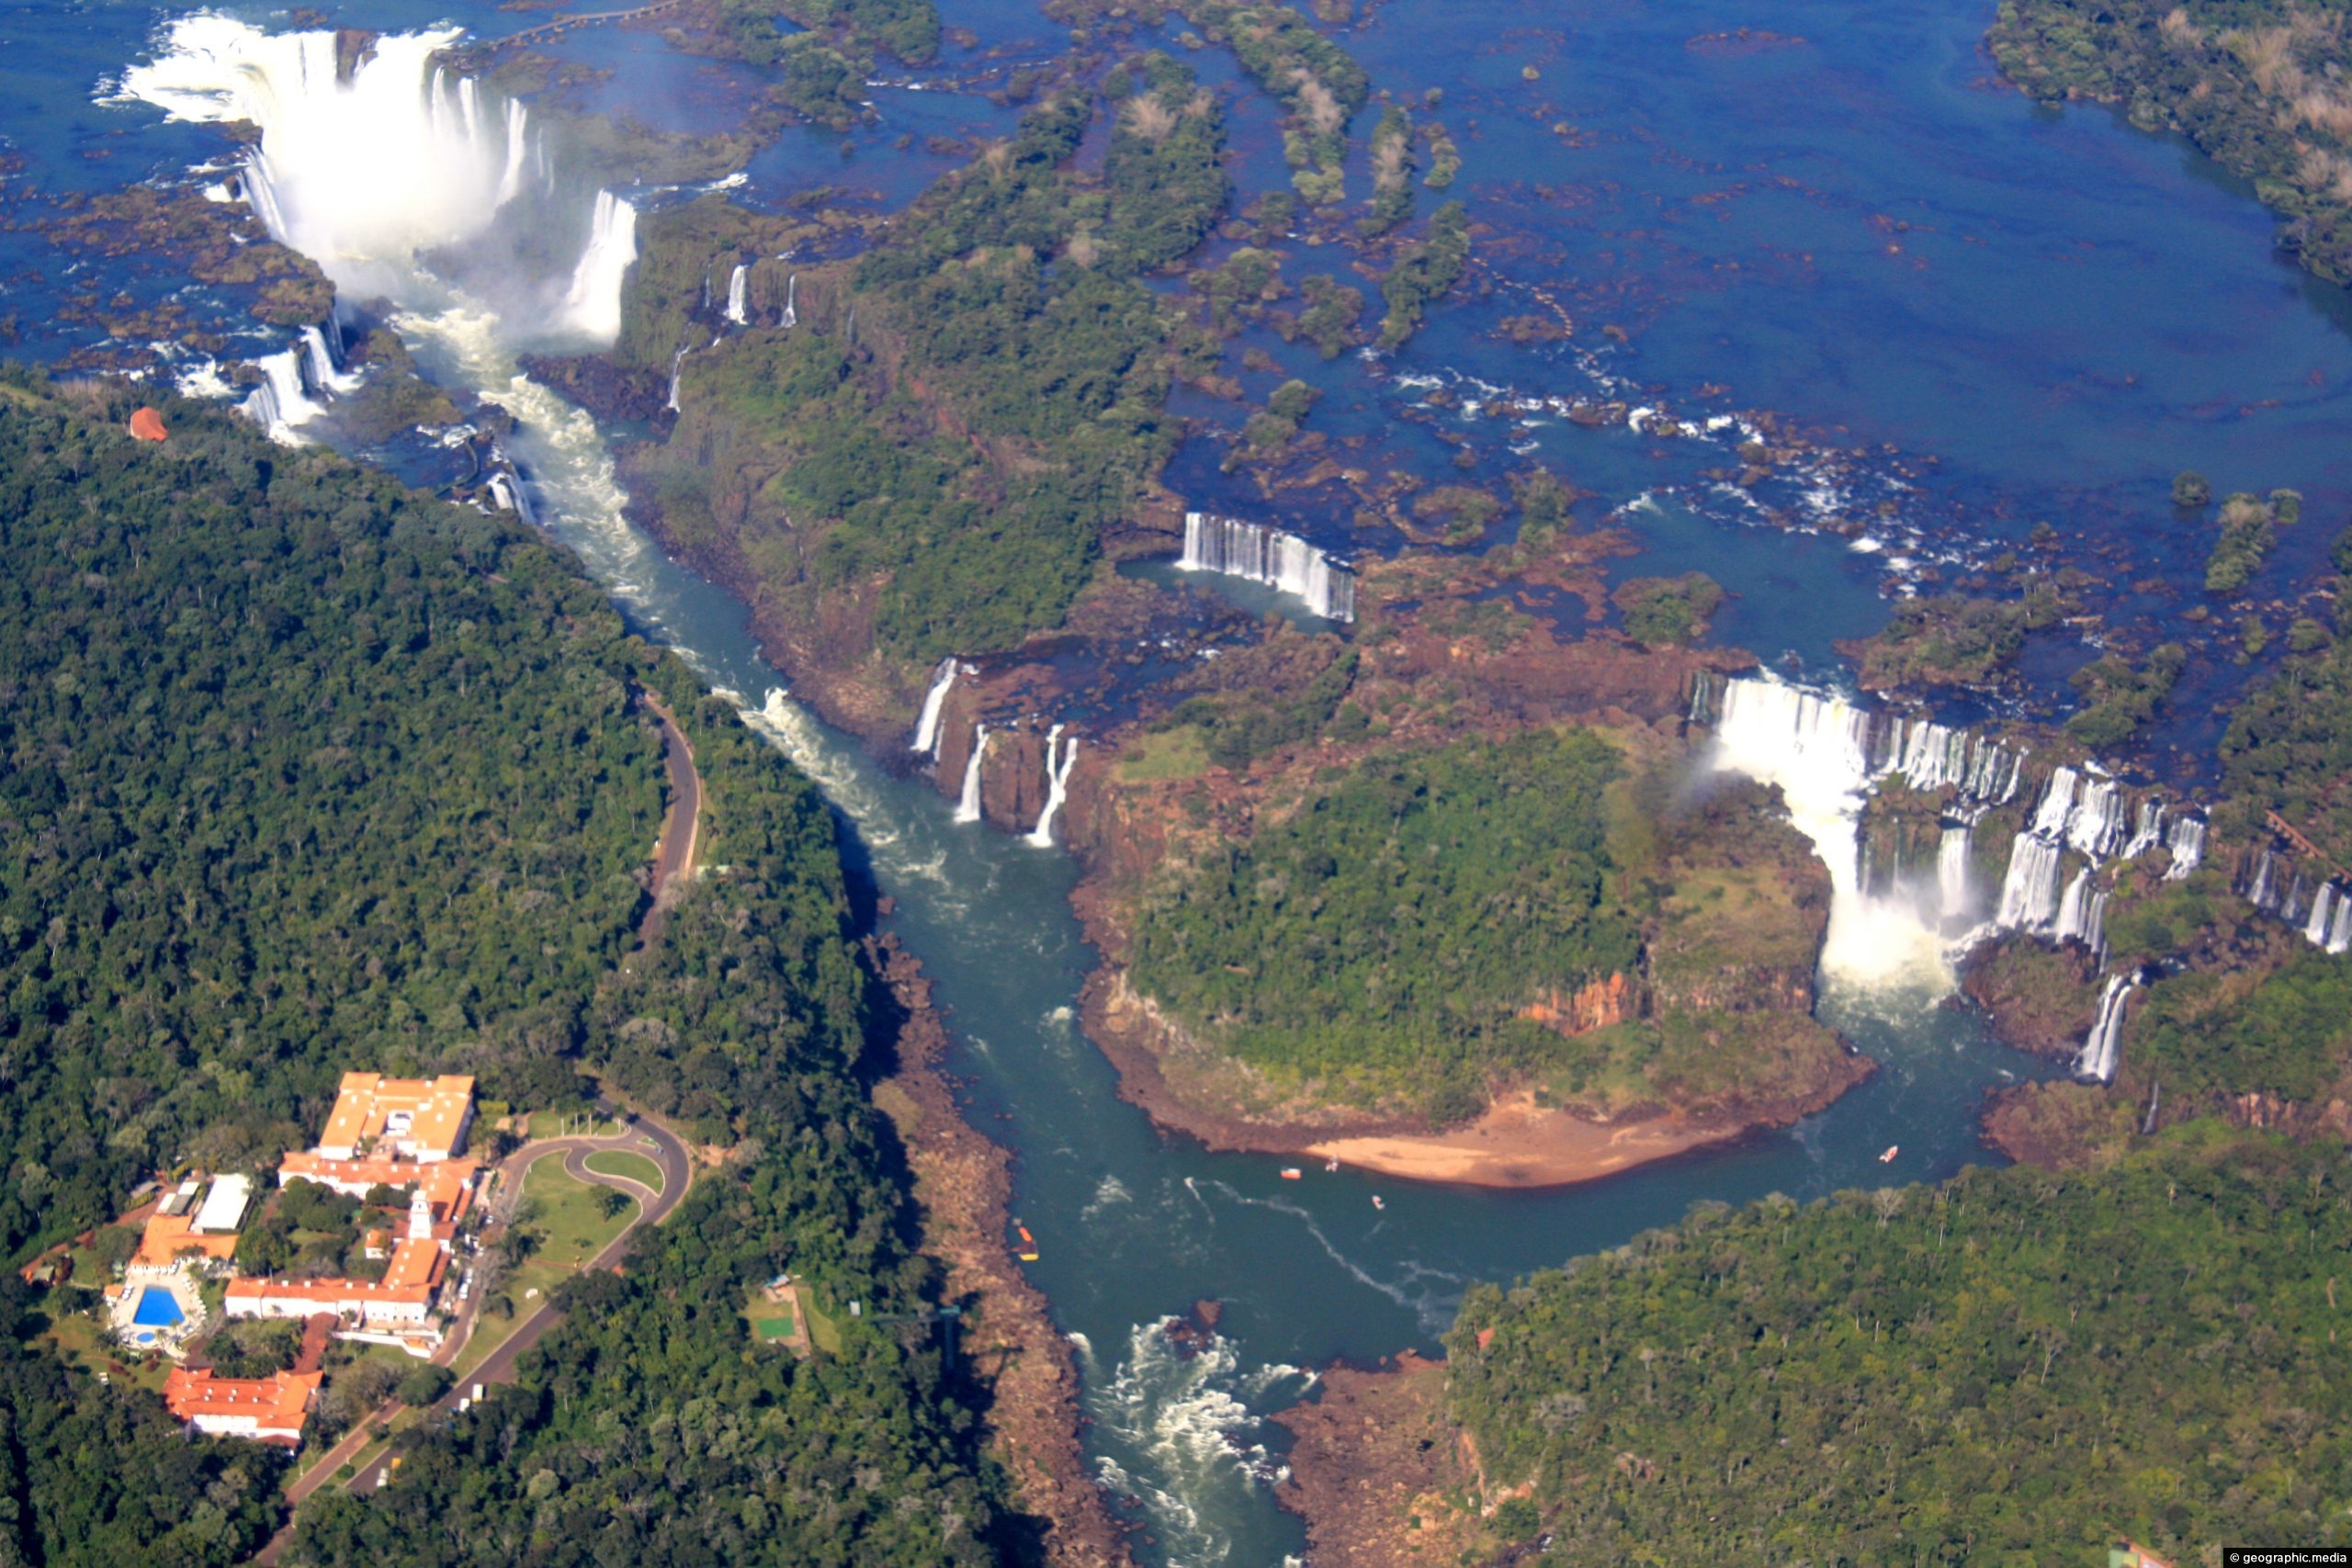 Aerial view of Iguassu Falls in Brazil